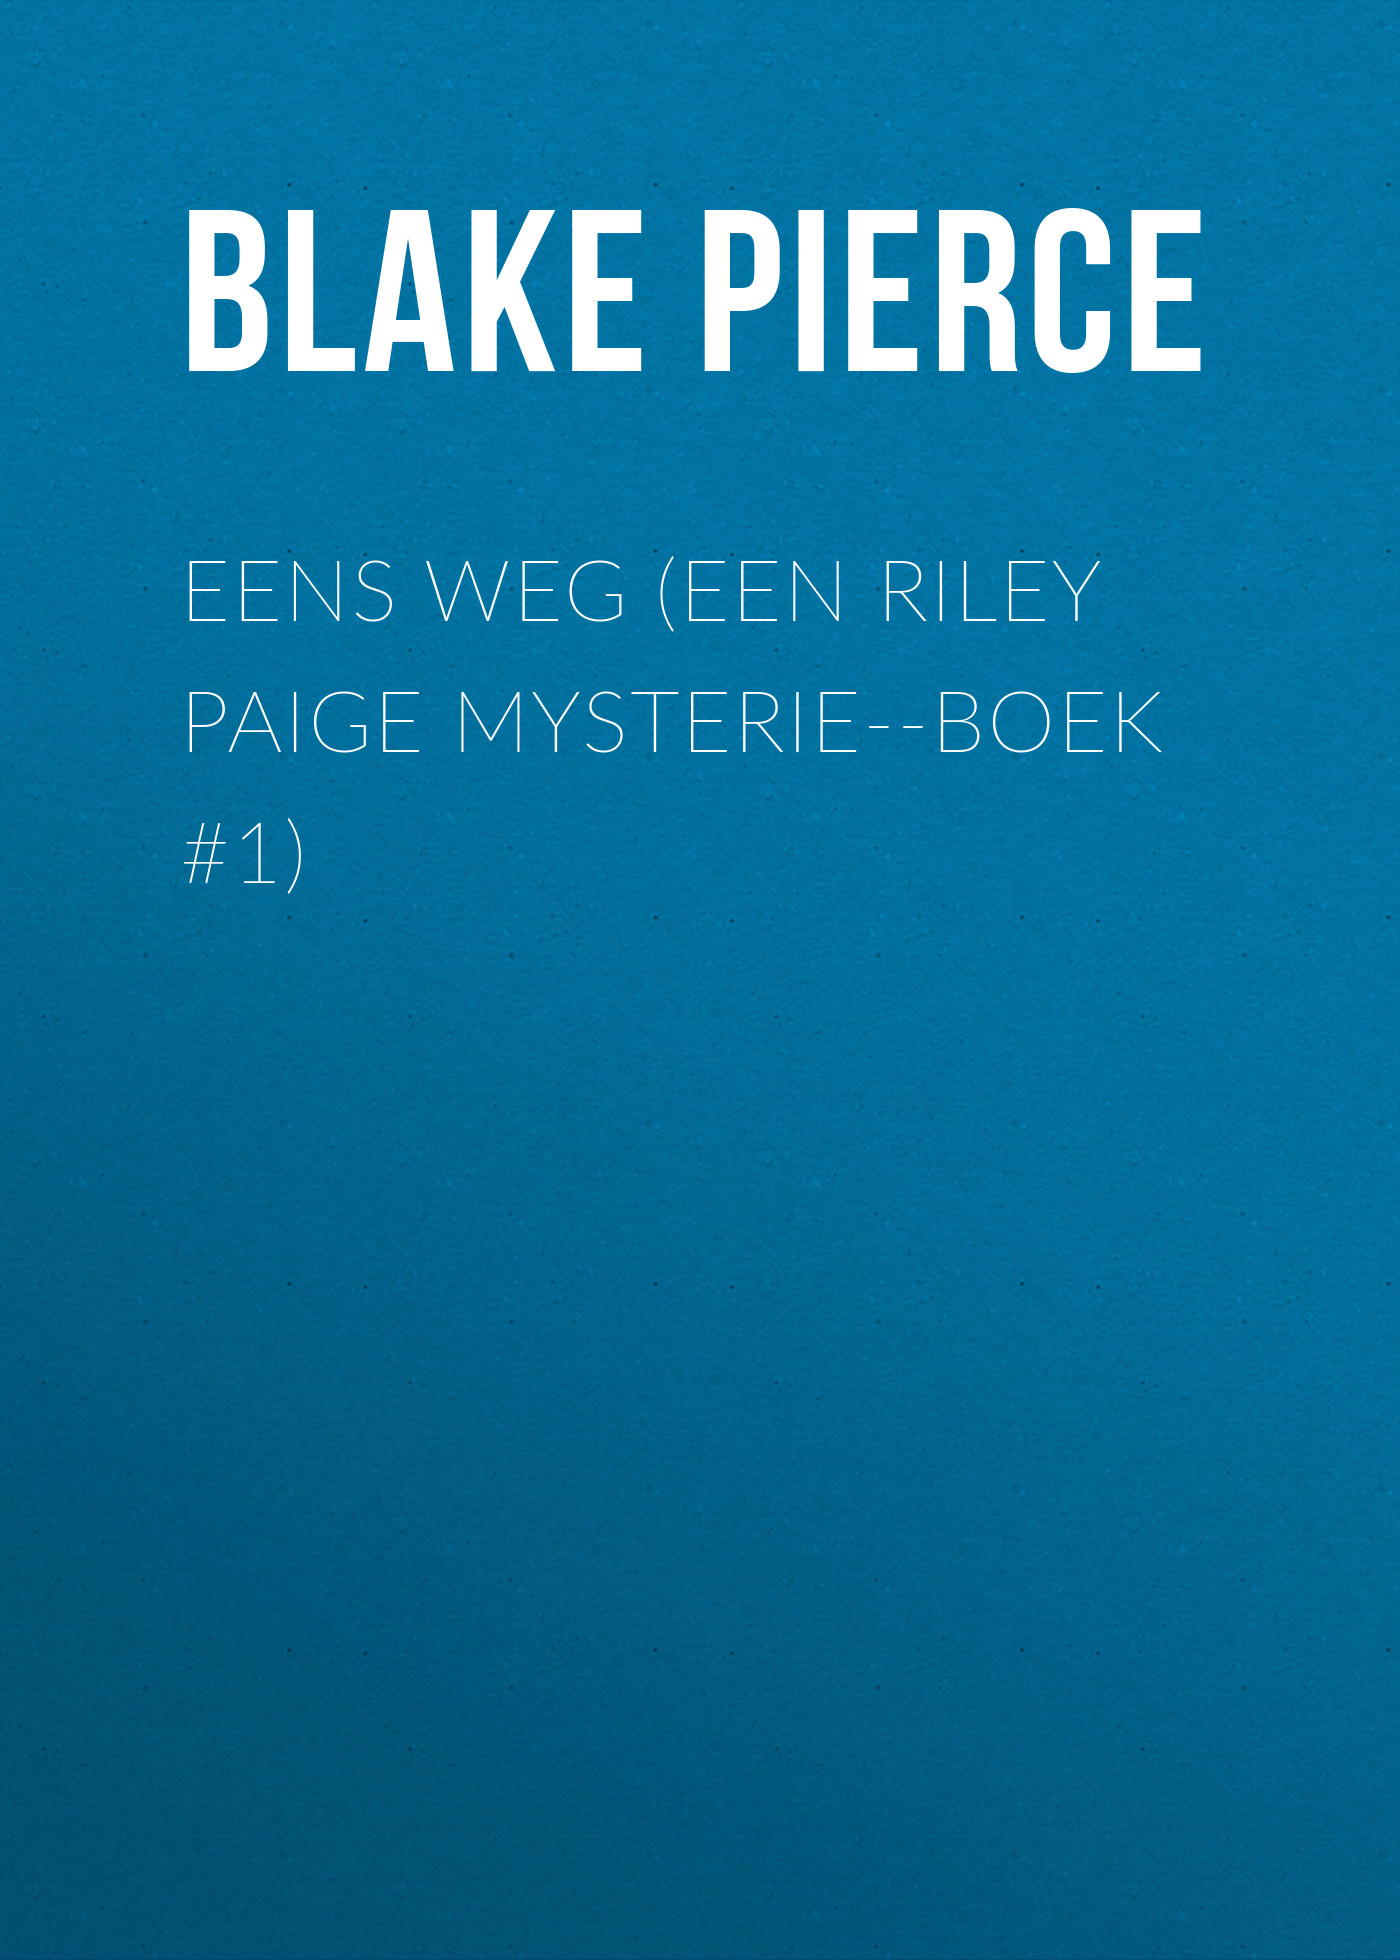 Скачать Eens Weg (Een Riley Paige Mysterie--Boek #1) - Blake Pierce